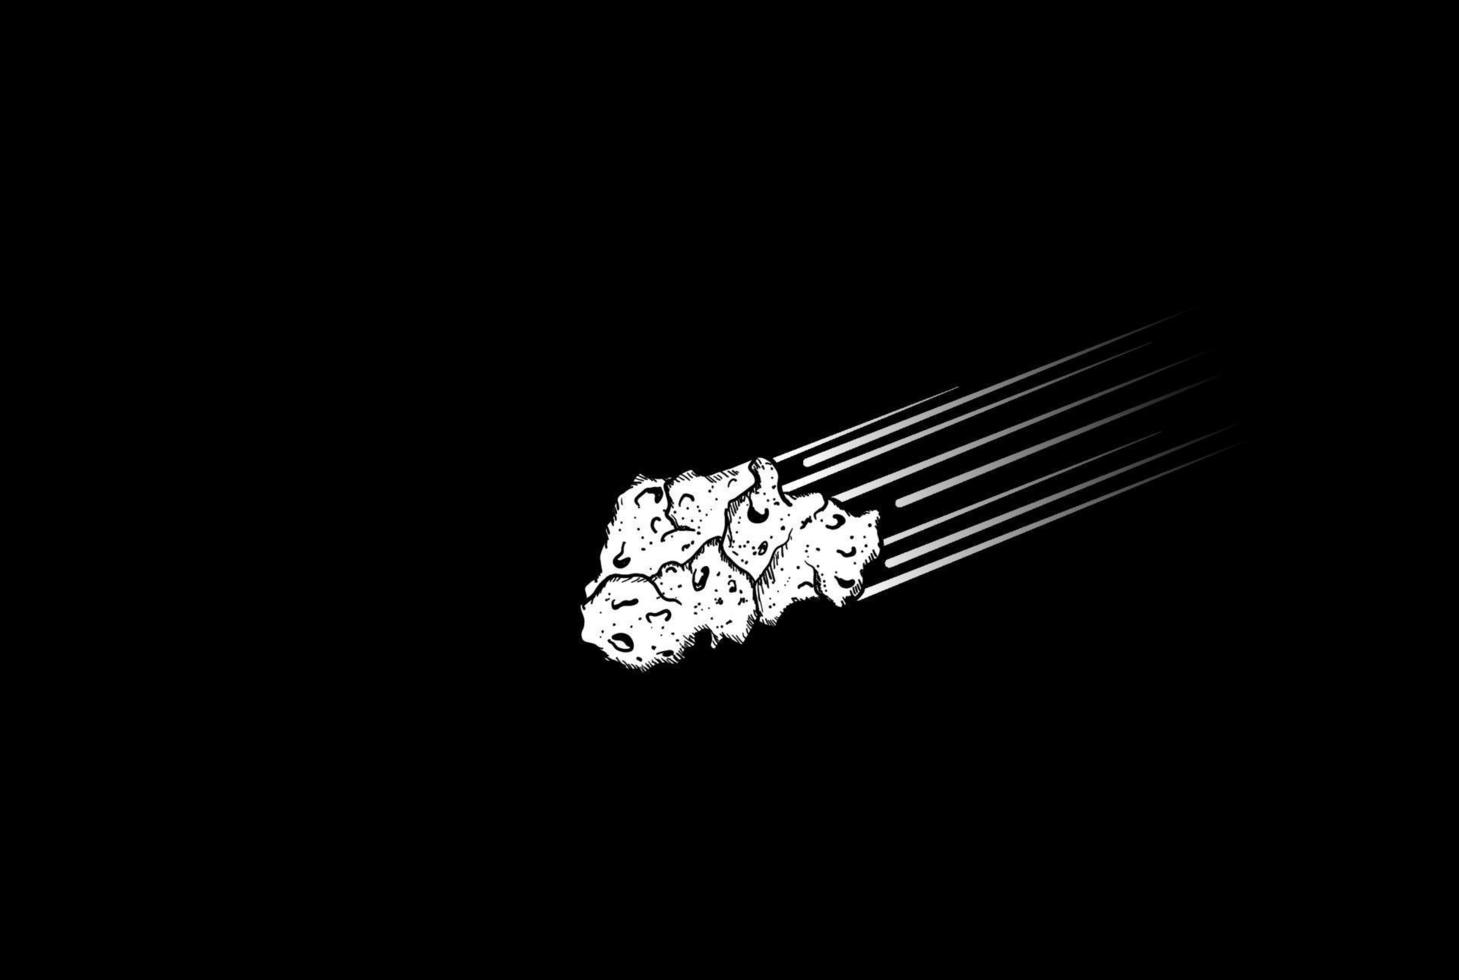 meteoro voador retrô vintage ou pedra de asteróide no design do logotipo do céu escuro vetor